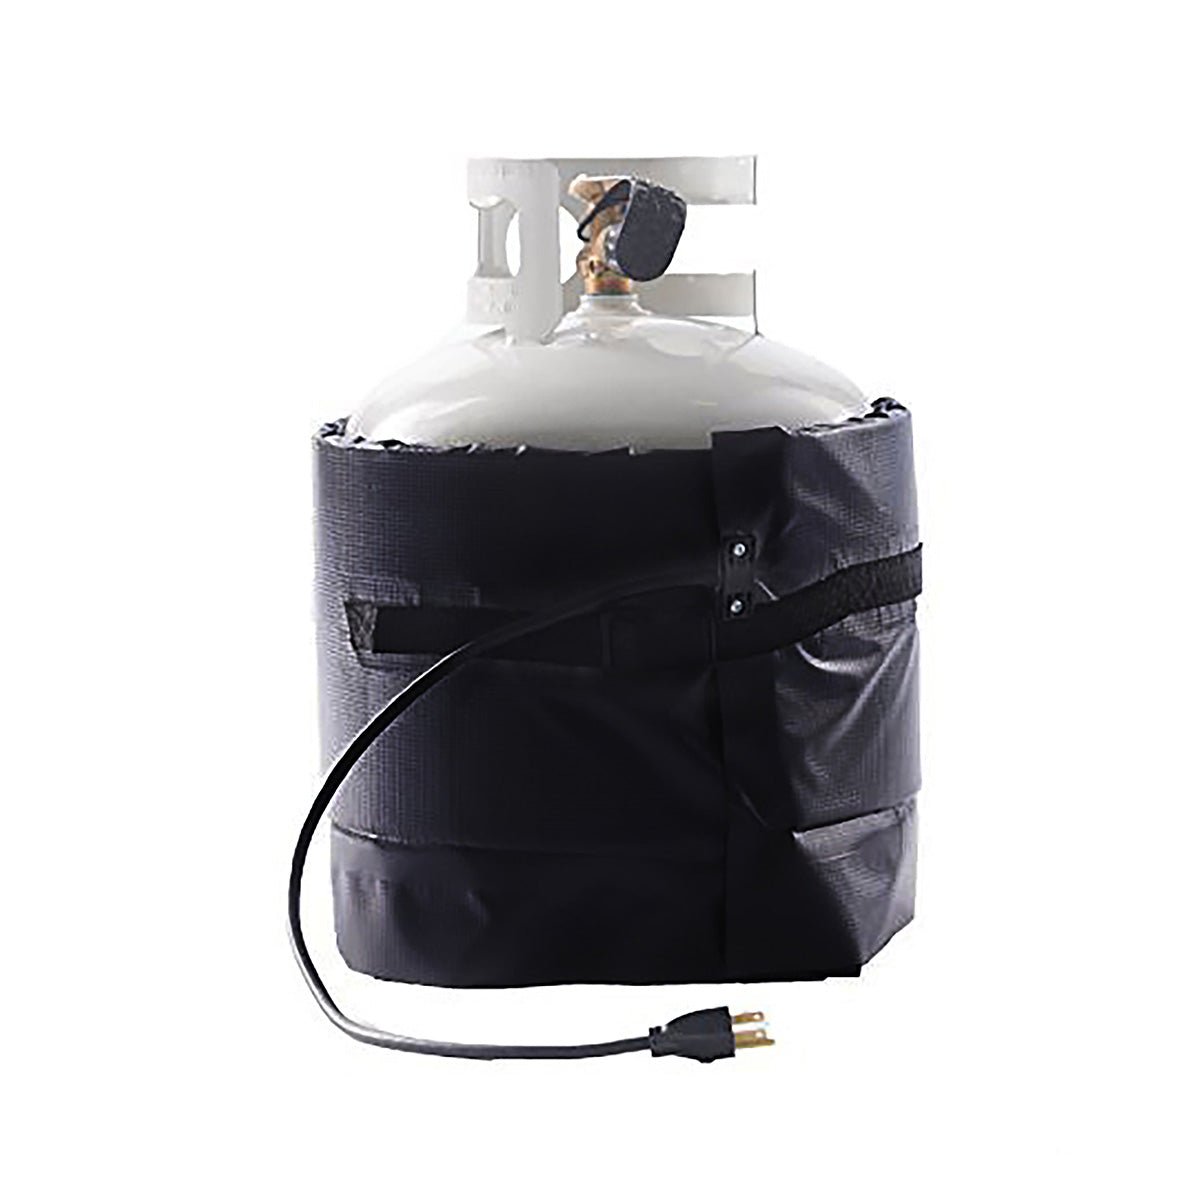 PBL20 - 20 Pound Tank Gas Cylinder Heater - PURspray